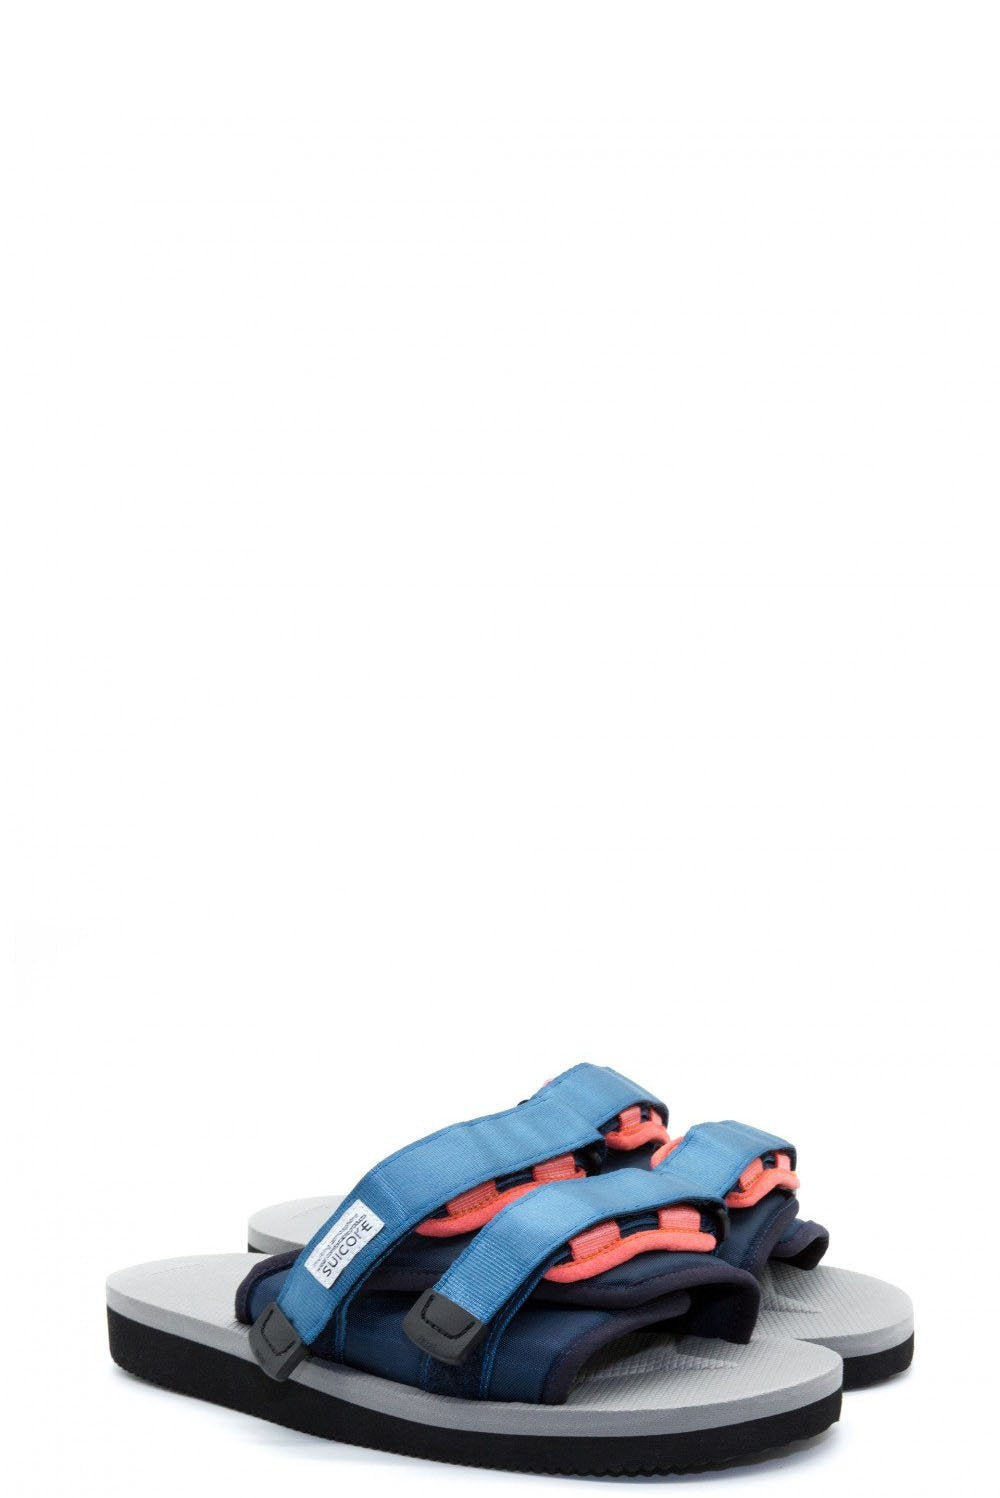 Suicoke Moto Cab Slide Sandal in blue/navy